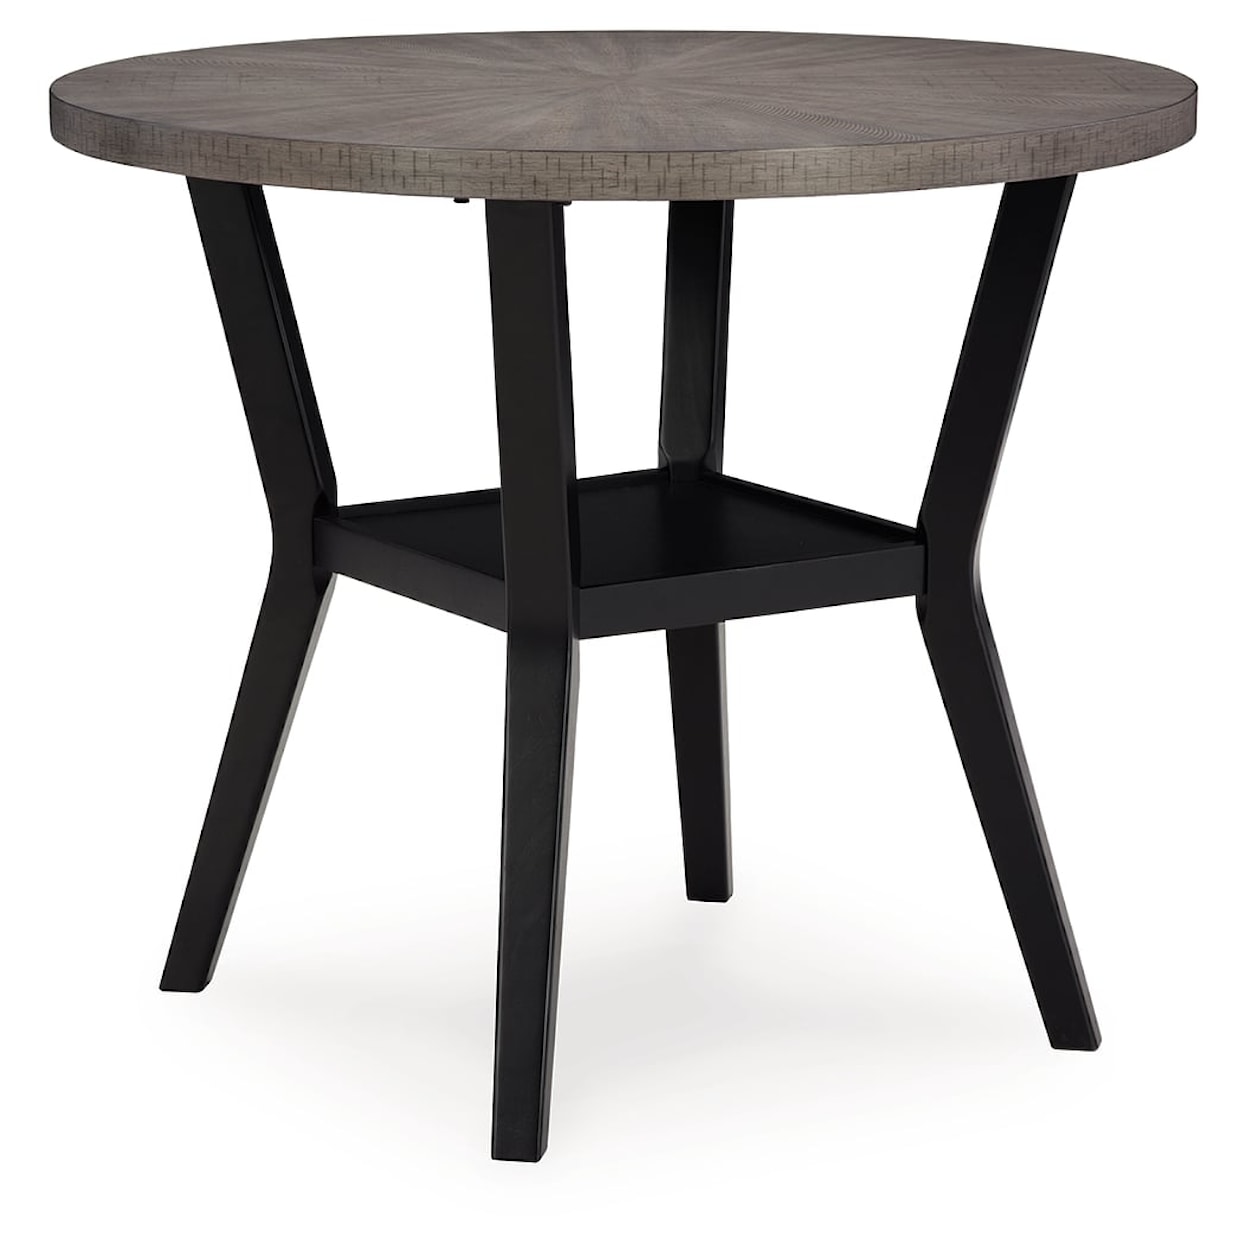 Benchcraft Corloda Round Counter Table Set